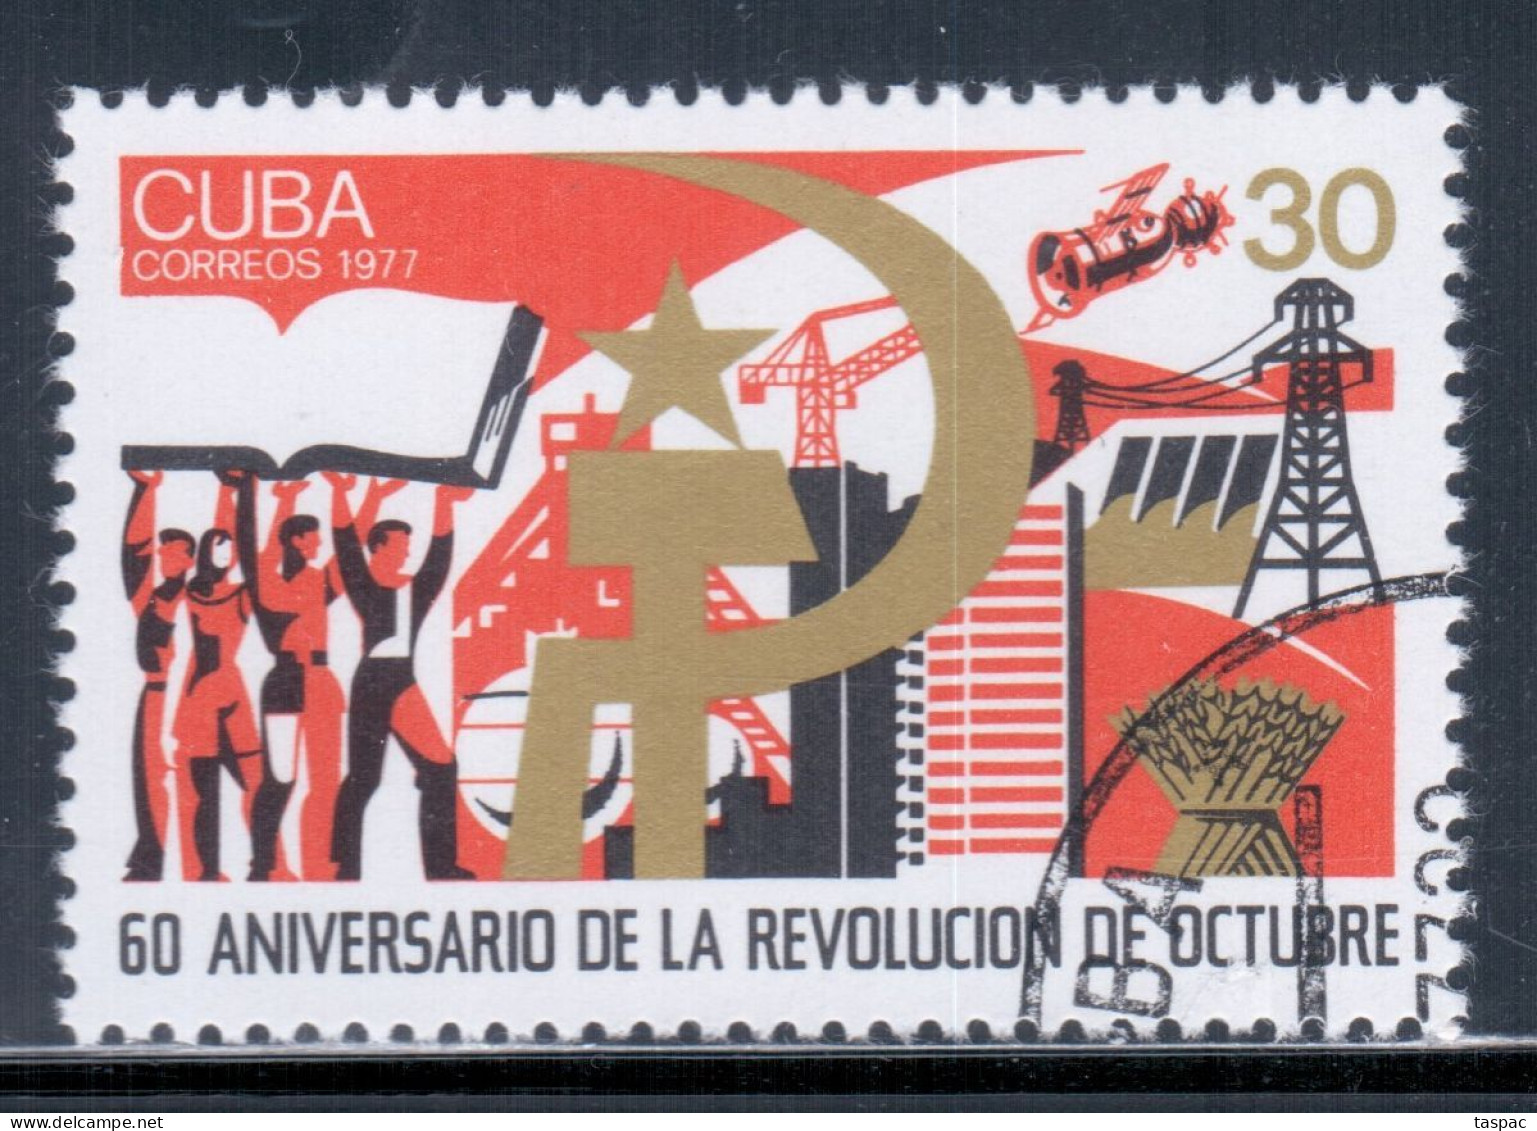 Cuba 1977 Mi# 2256 Used - Short Set - October Revolution, Russia, 60th Anniv. / Space - Nordamerika